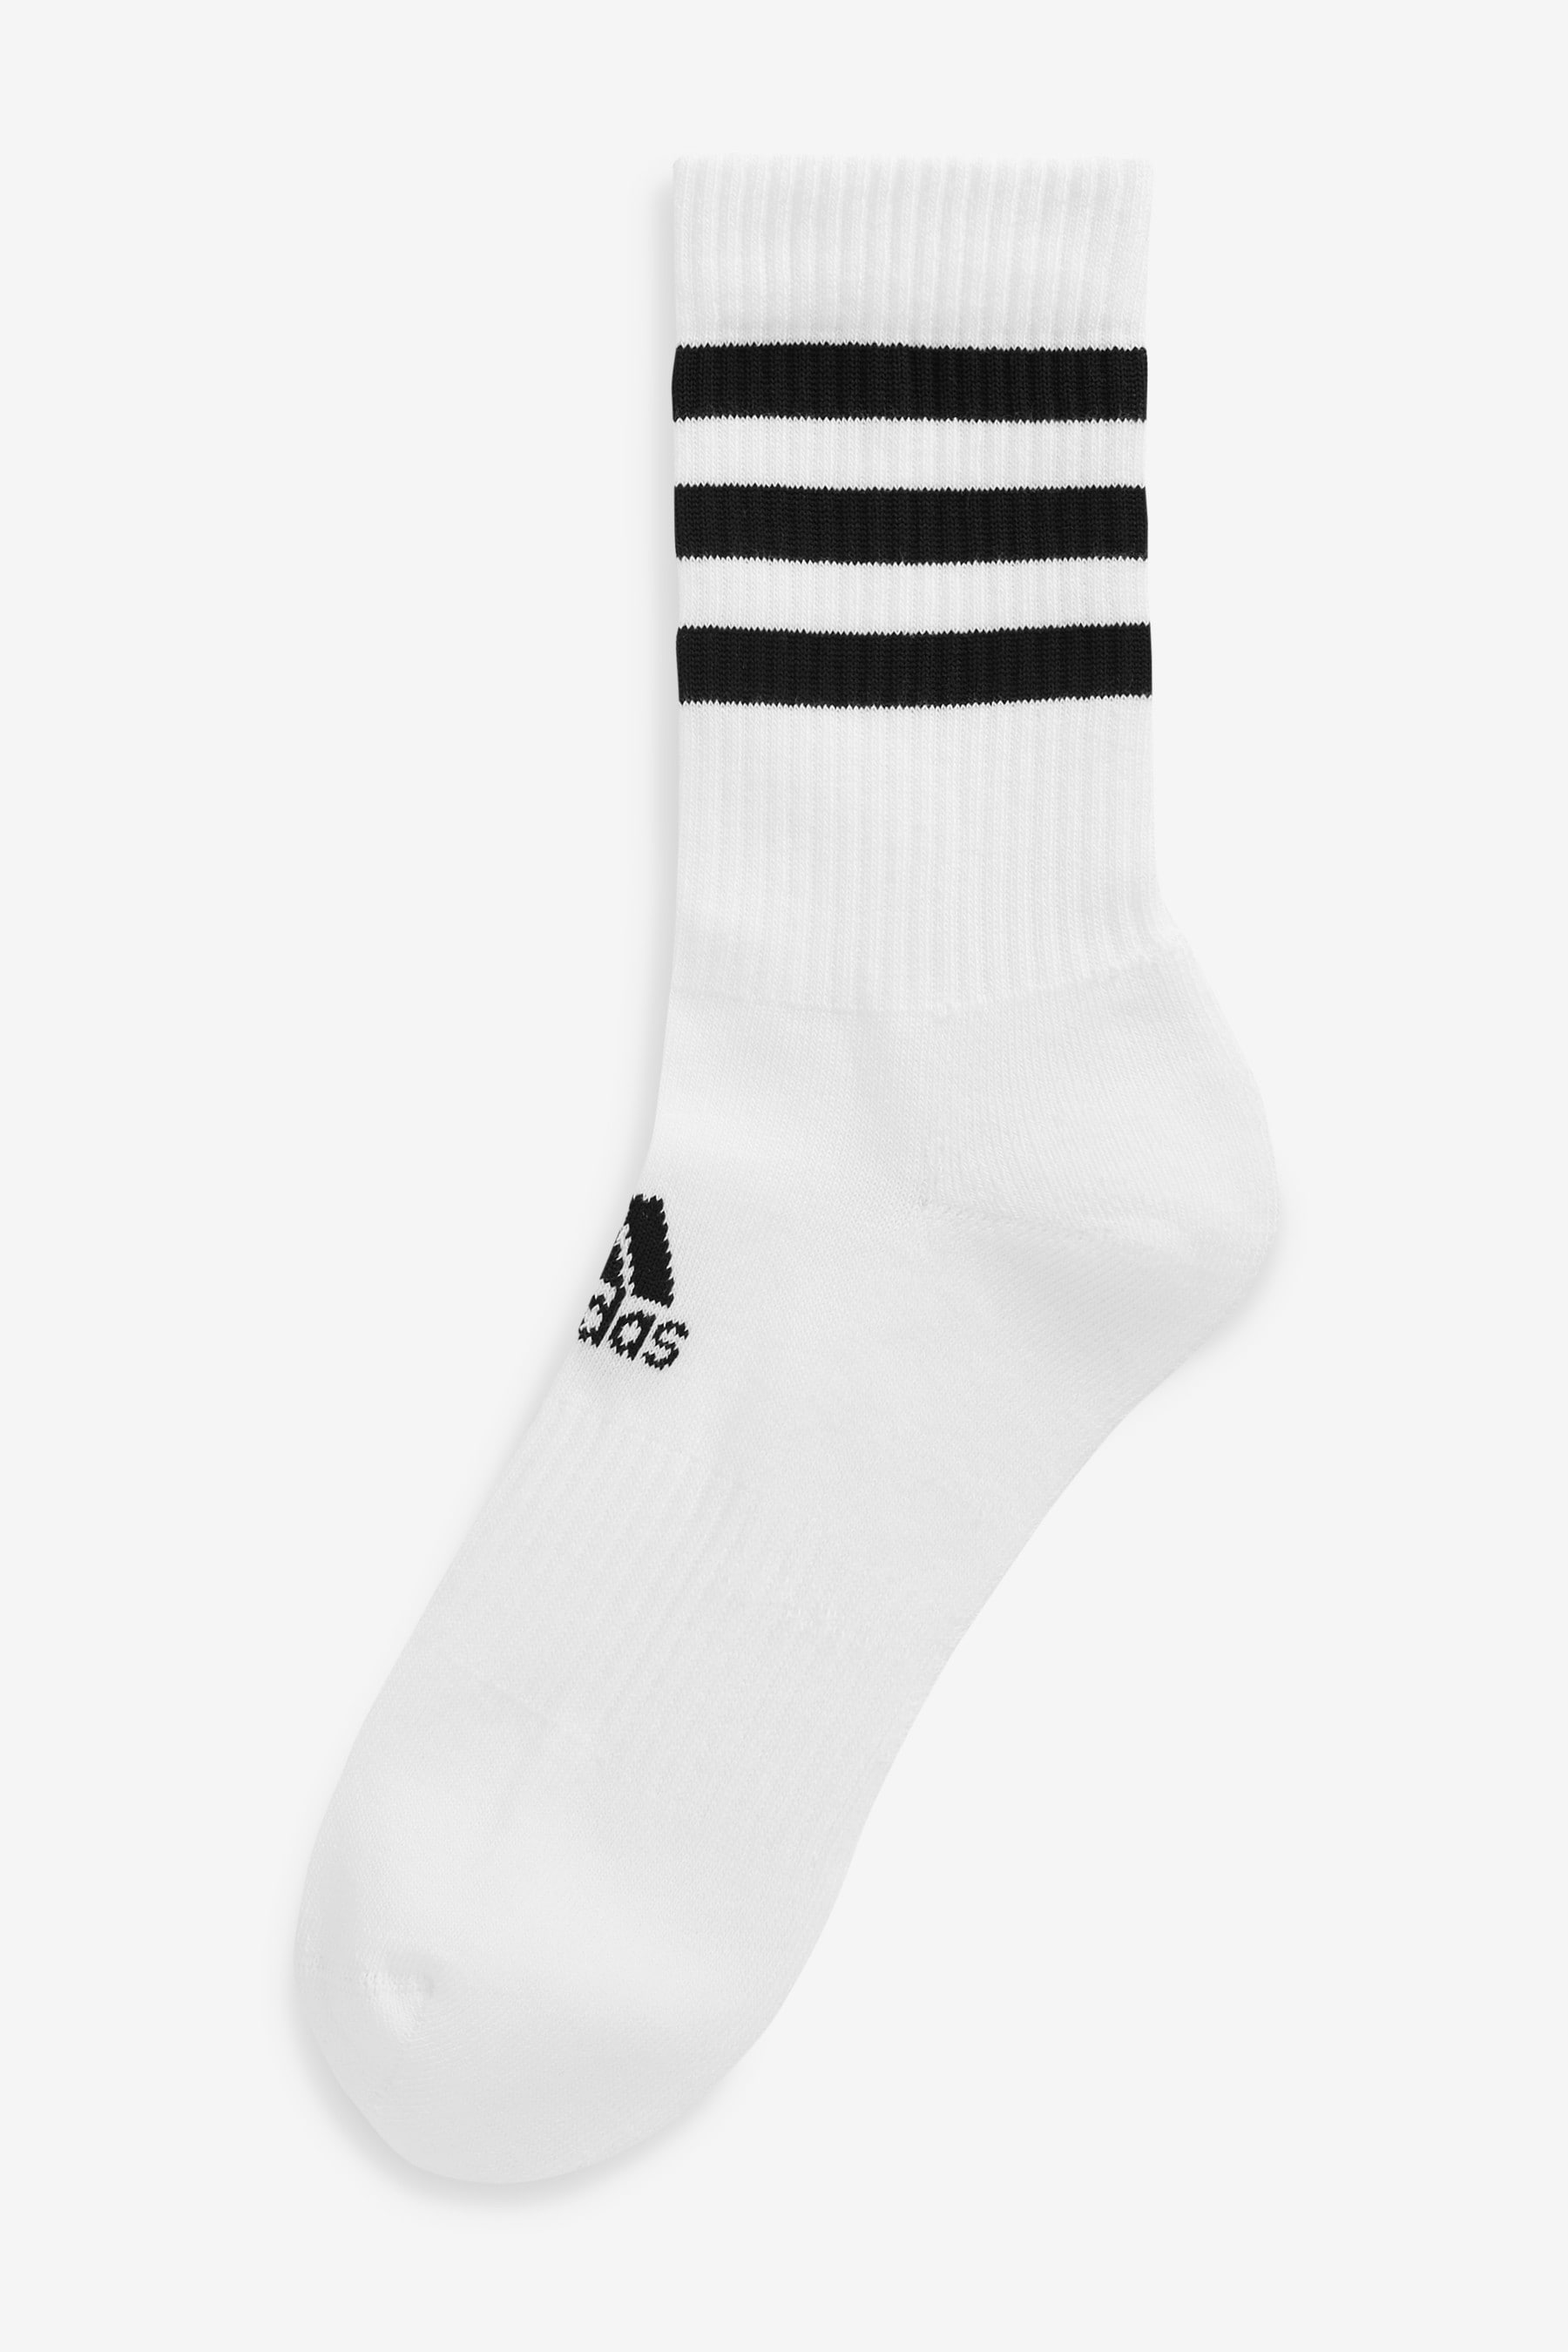 Buy Adidas Adult White 3 Stripe Crew Socks Three Pack From The Next Uk